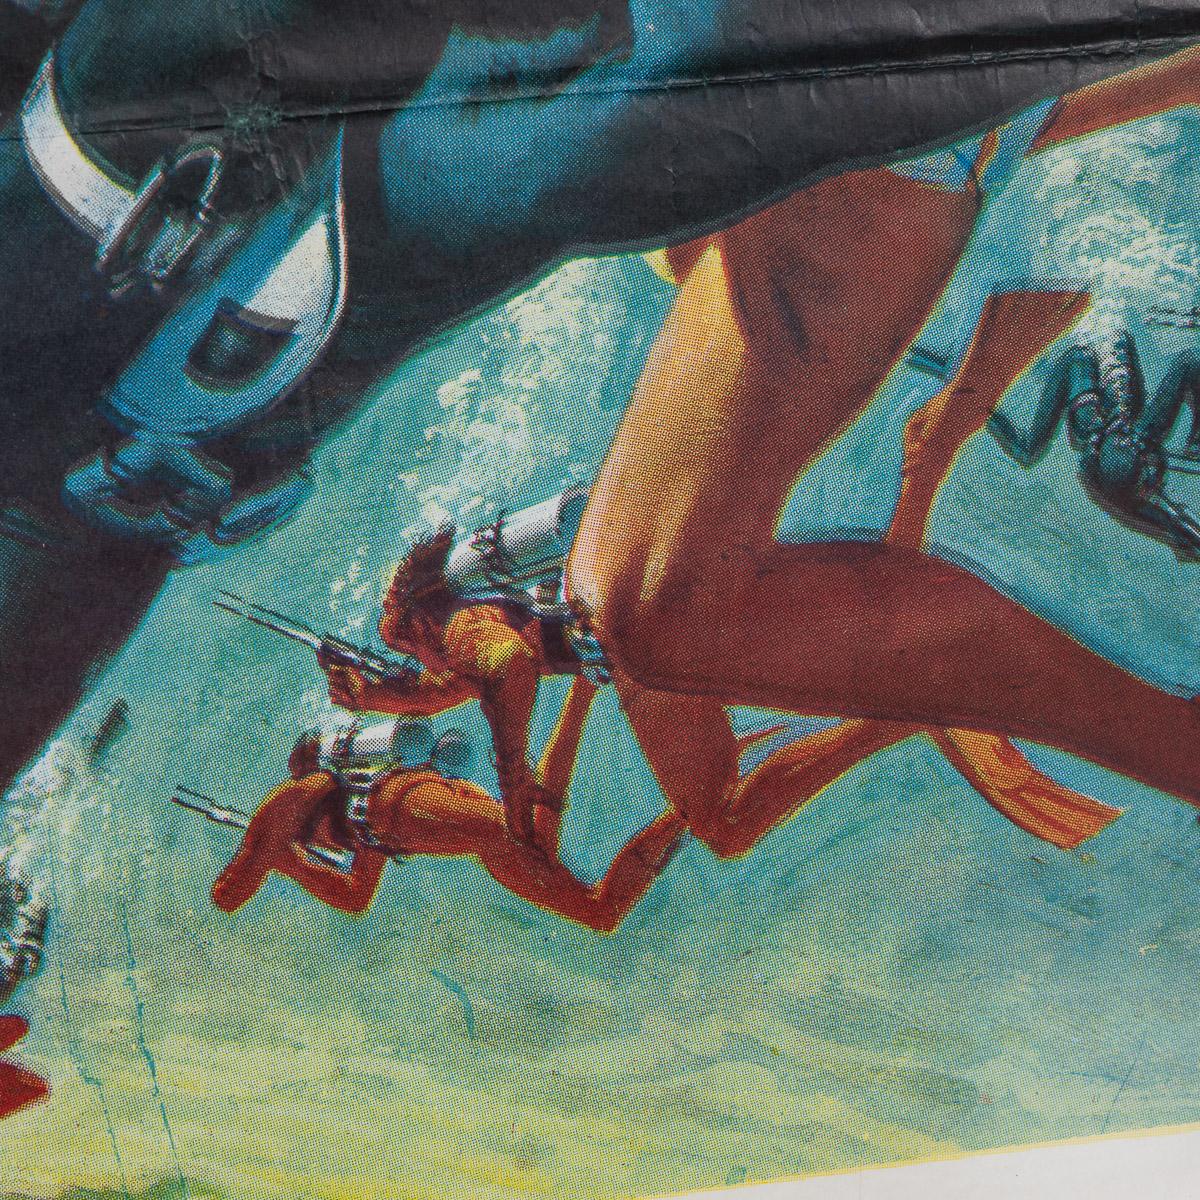 Original Italian Re-Release James Bond 'Thunderball' Poster, c.1971 For Sale 9